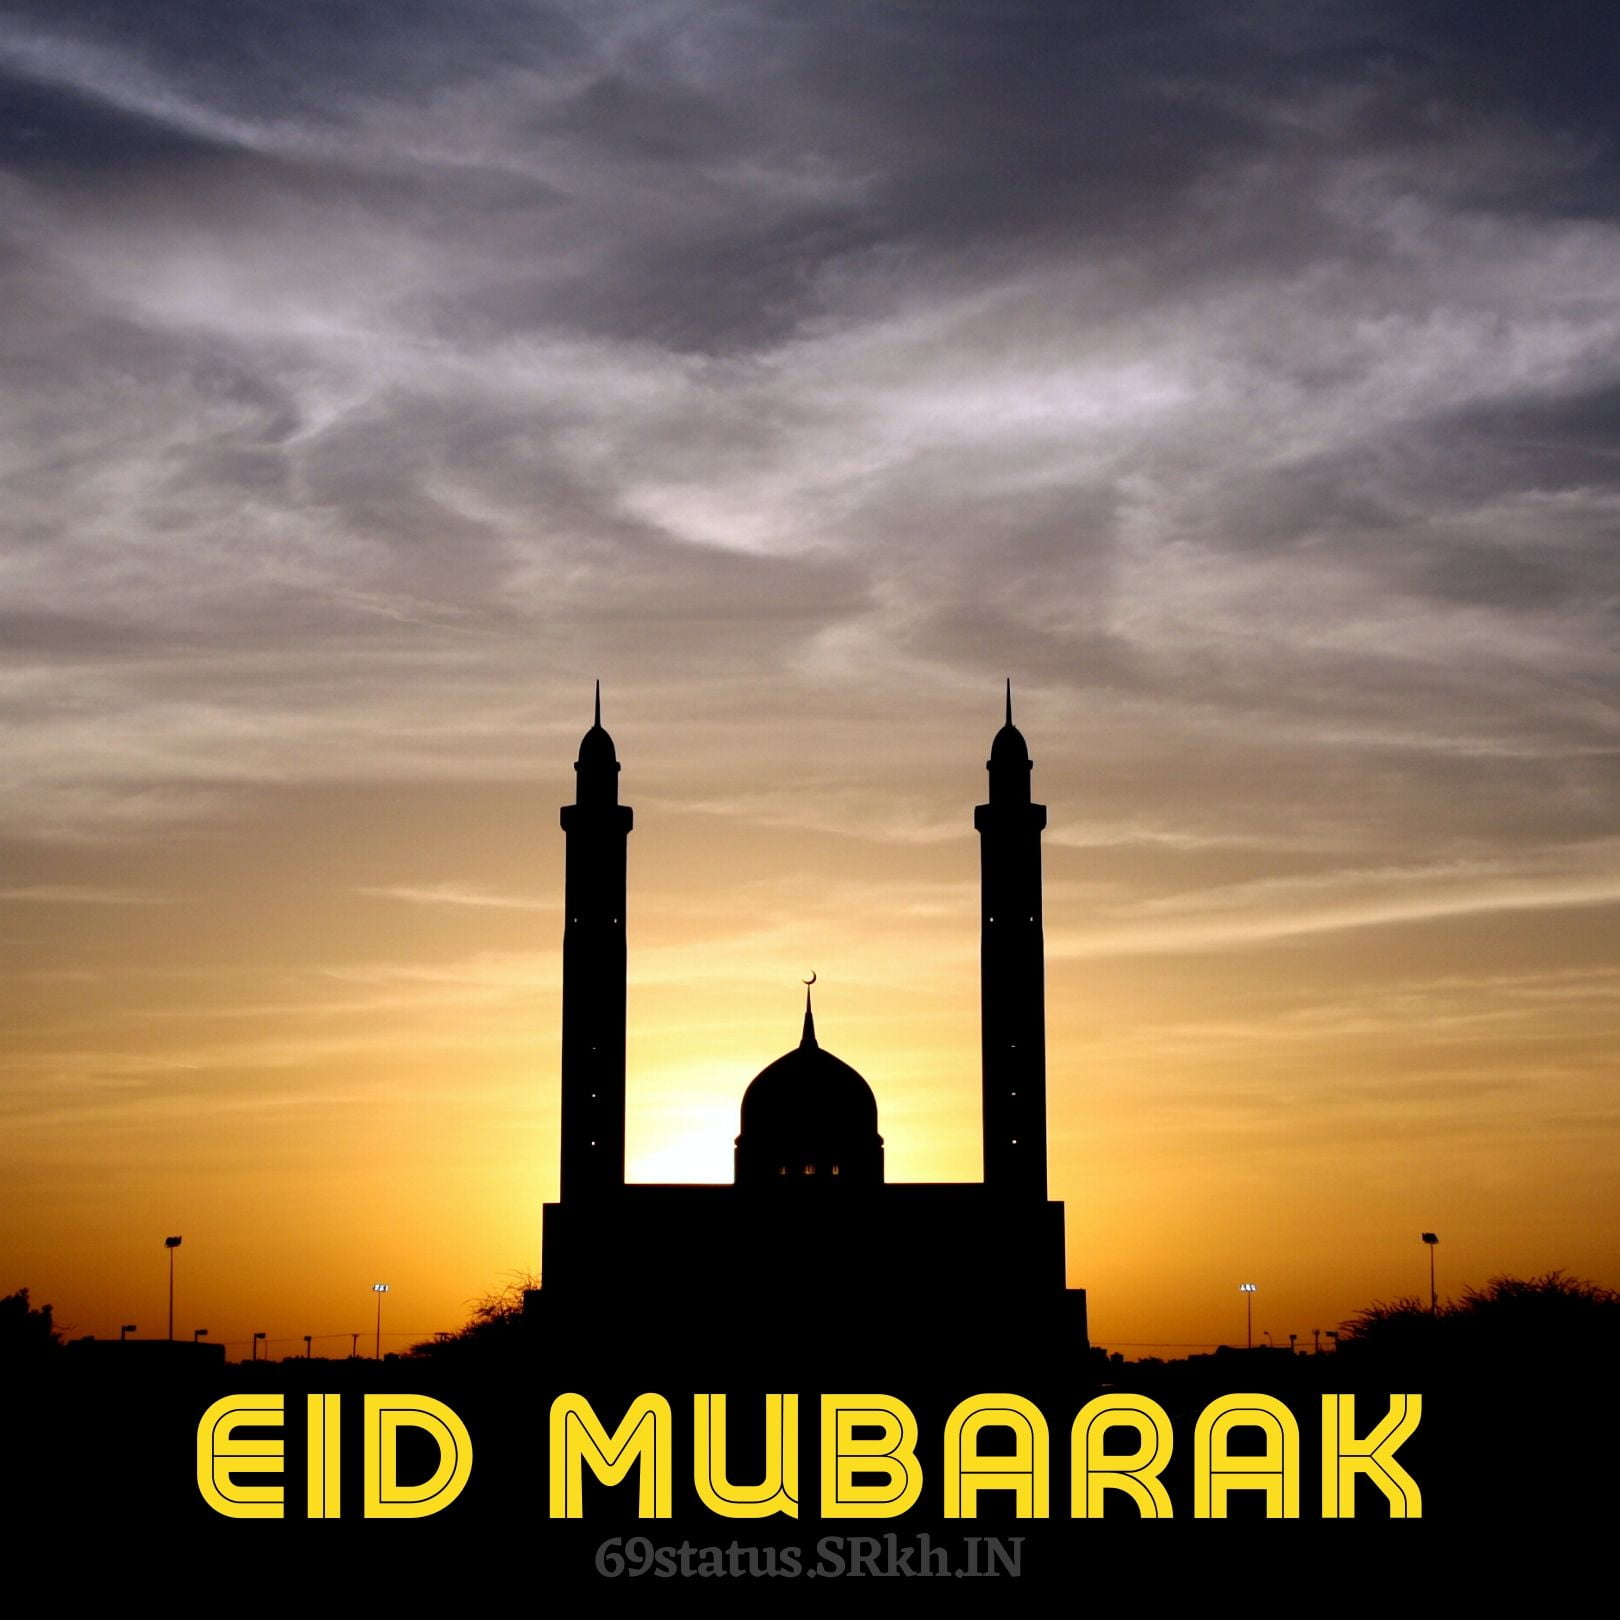 Eid Mubarak Beautiful Image free download